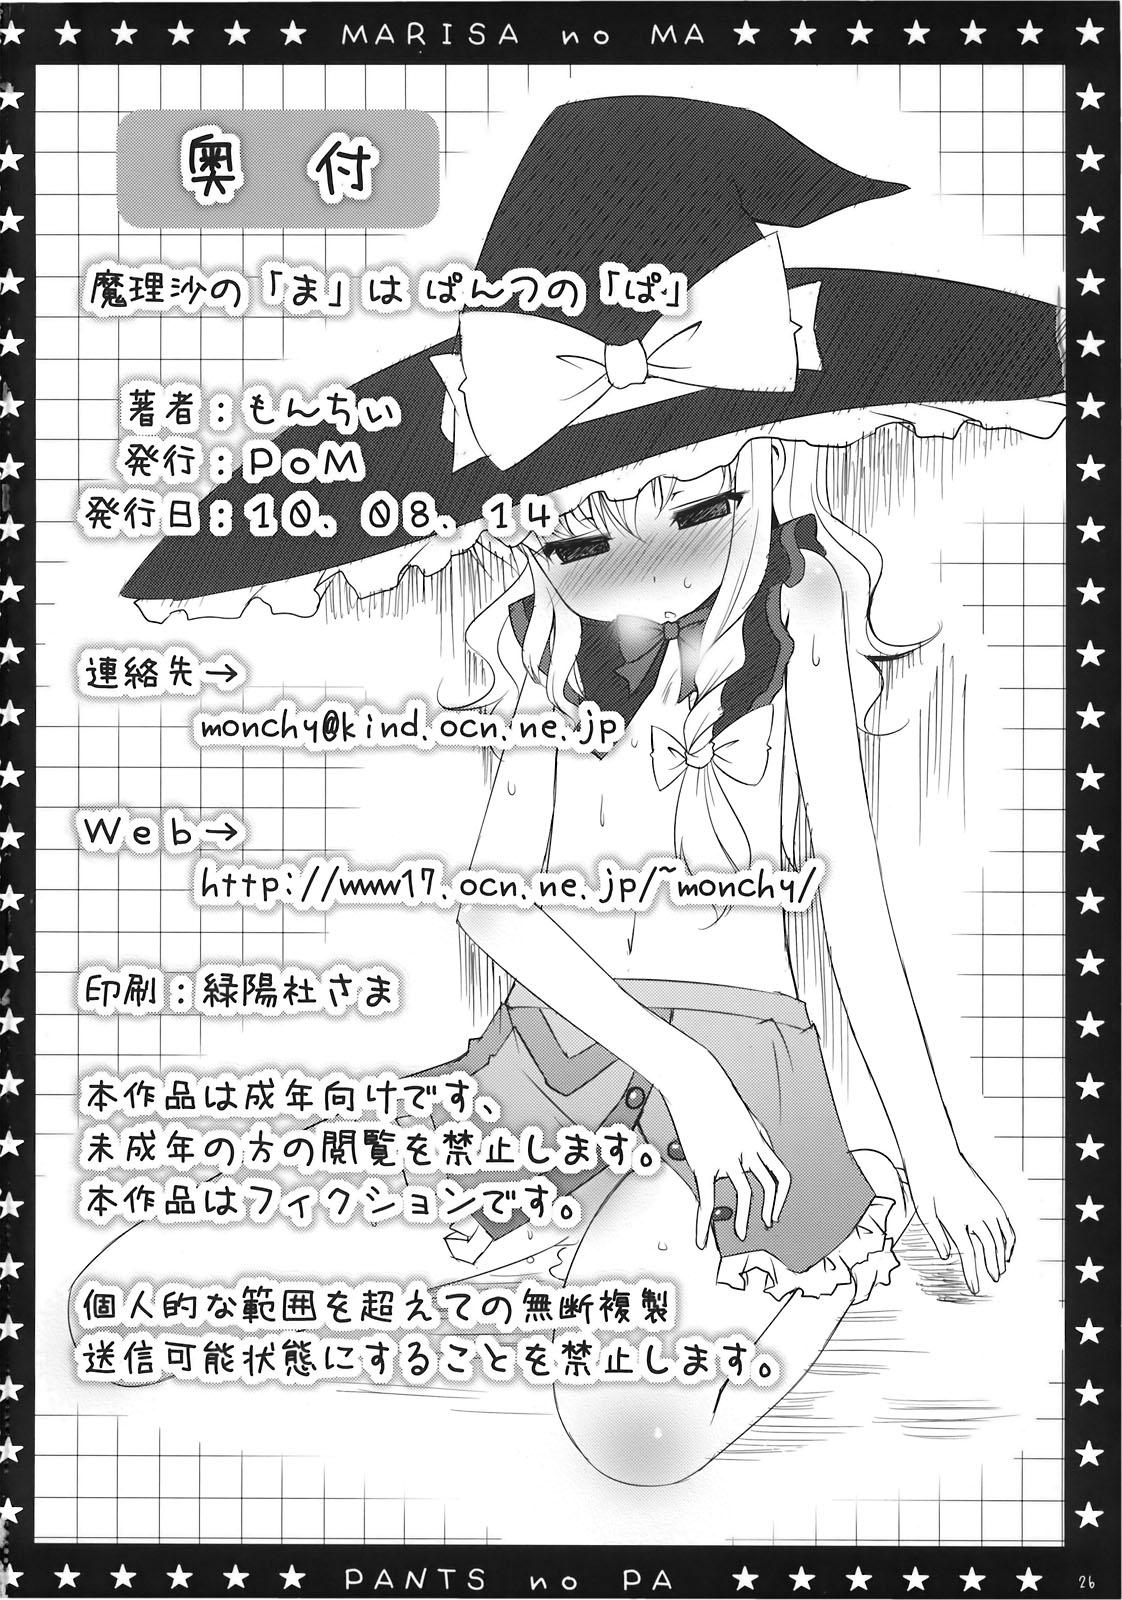 Head Marisa no「Ma」wa Pantsu no「Pa」 - Touhou project Gape - Page 26